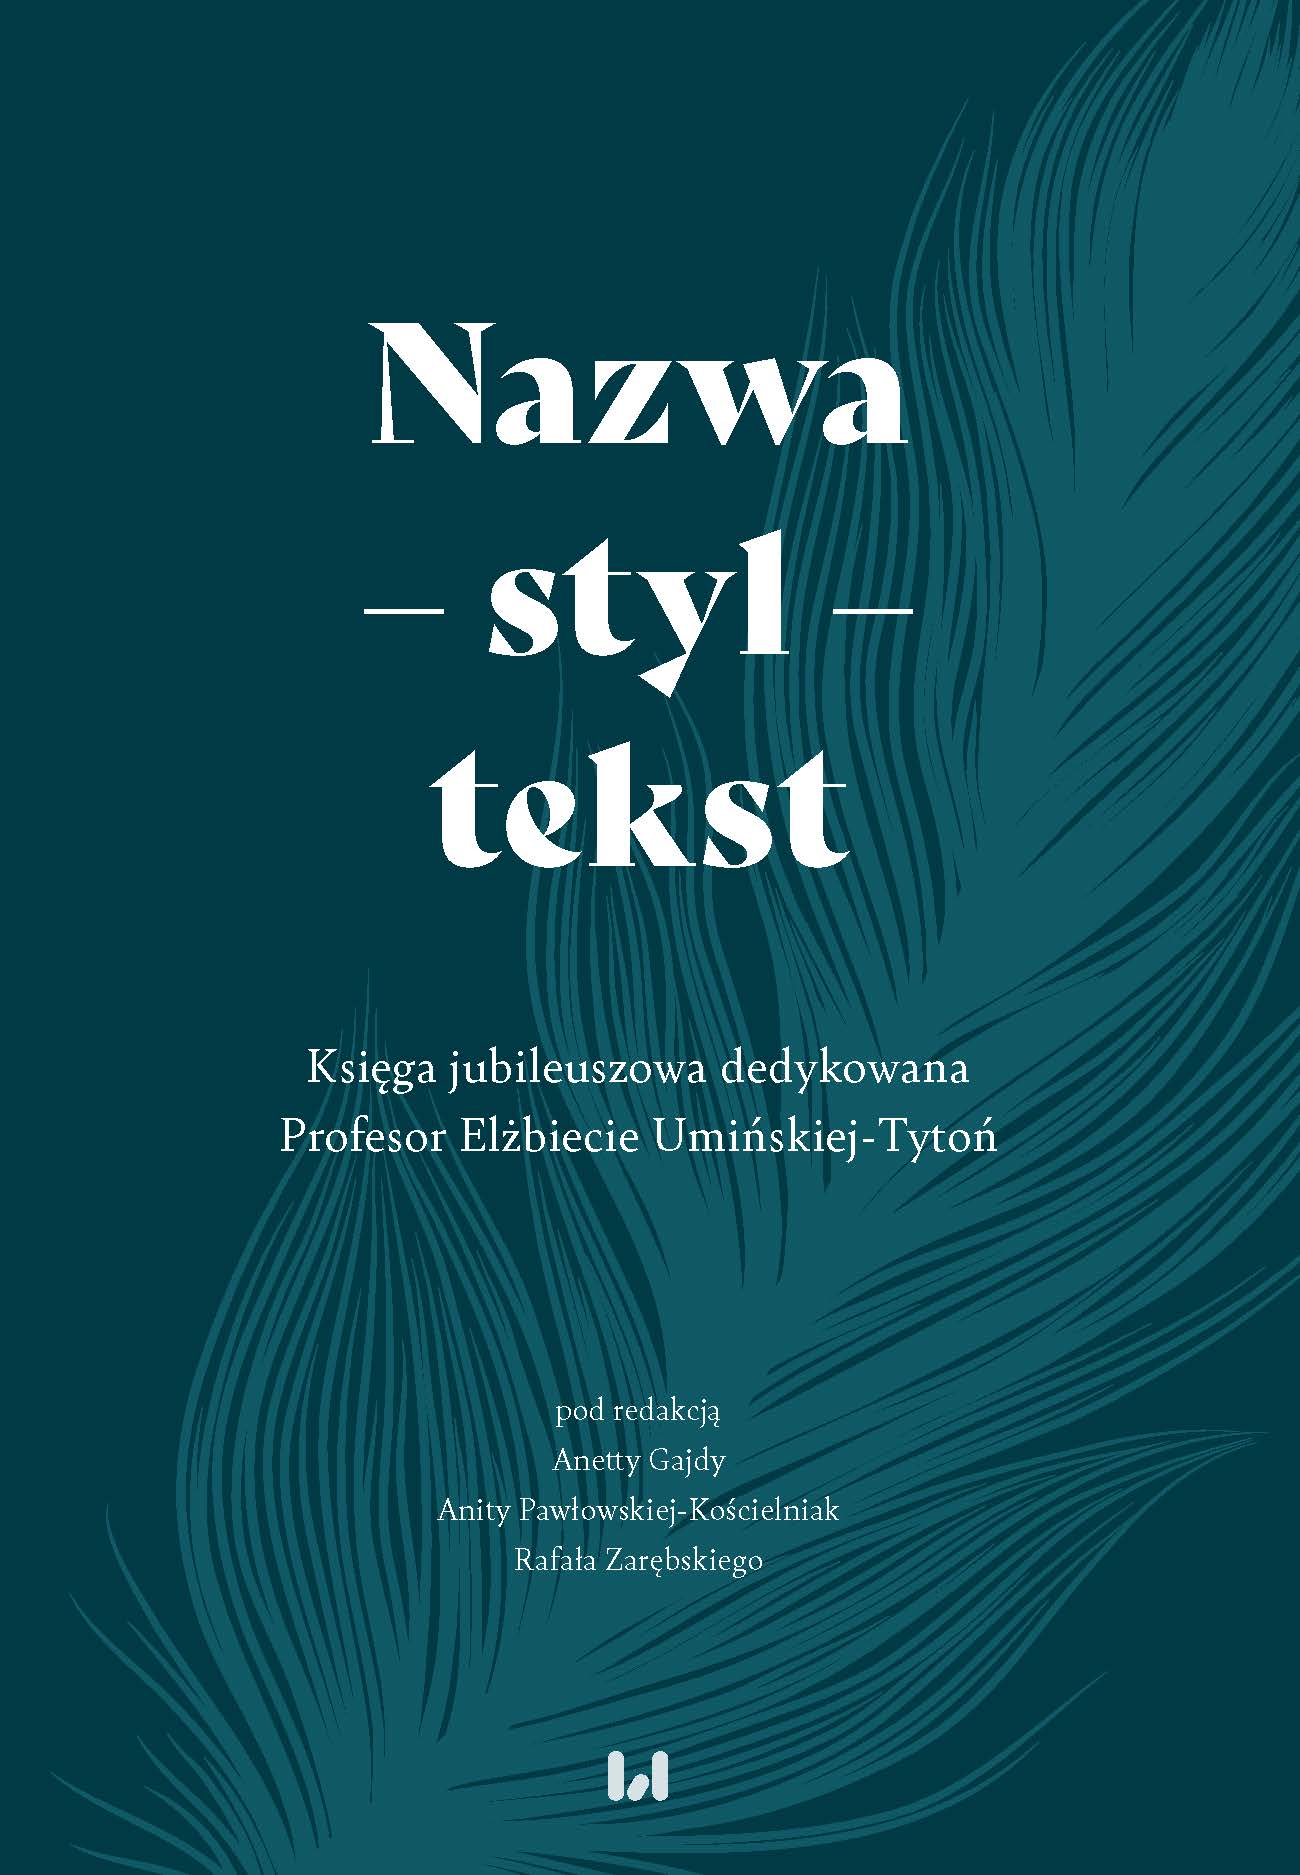 Name – style – text. A jubilee book dedicated to Professor Elżebieta Umińska-Tytoń Cover Image